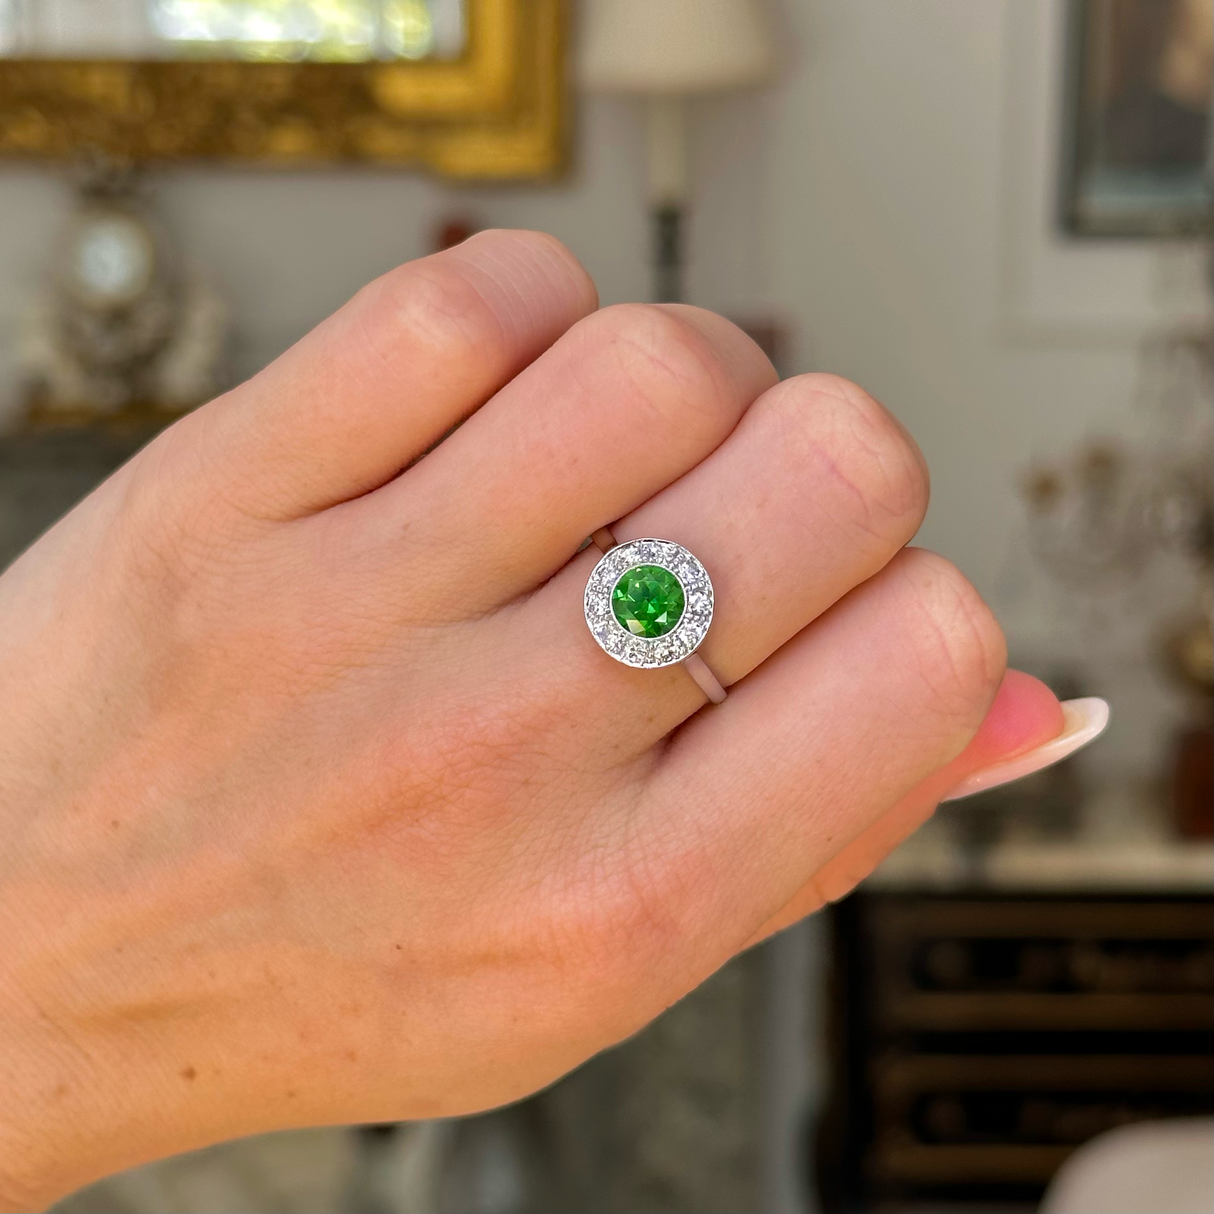 Vintage, 1.20ct demantoid green garnet & diamond cluster ring, 18ct white gold